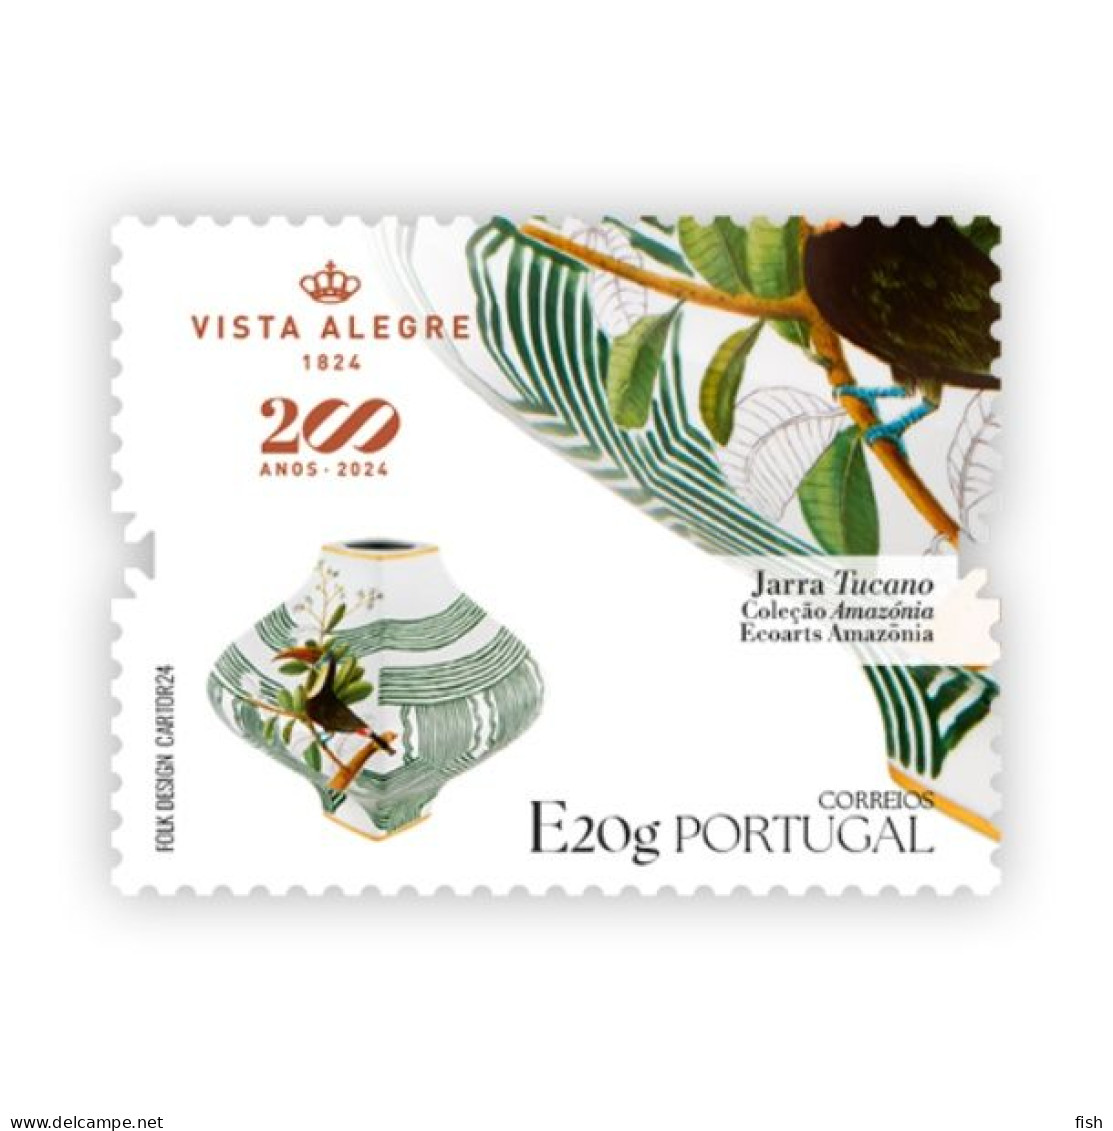 Portugal ** & 200 Years Of Vista Alegre, Tucano Jar, Amazonia Collection, Ecoarte Amazonia 1824-2024 (7199) - Protection De L'environnement & Climat